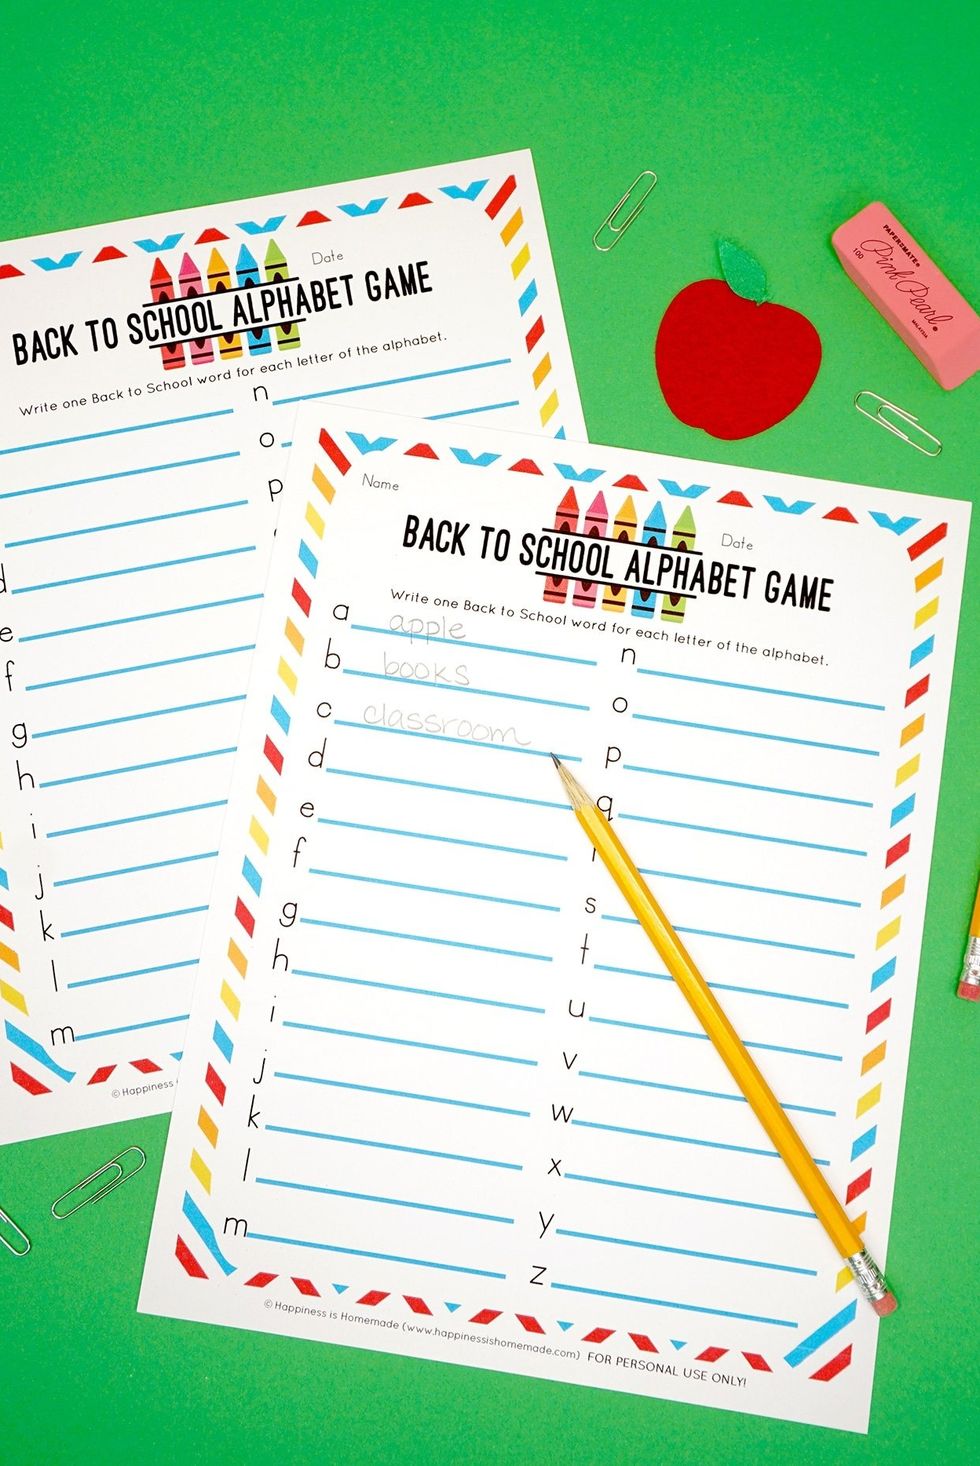 a back to school alphabet game sheet